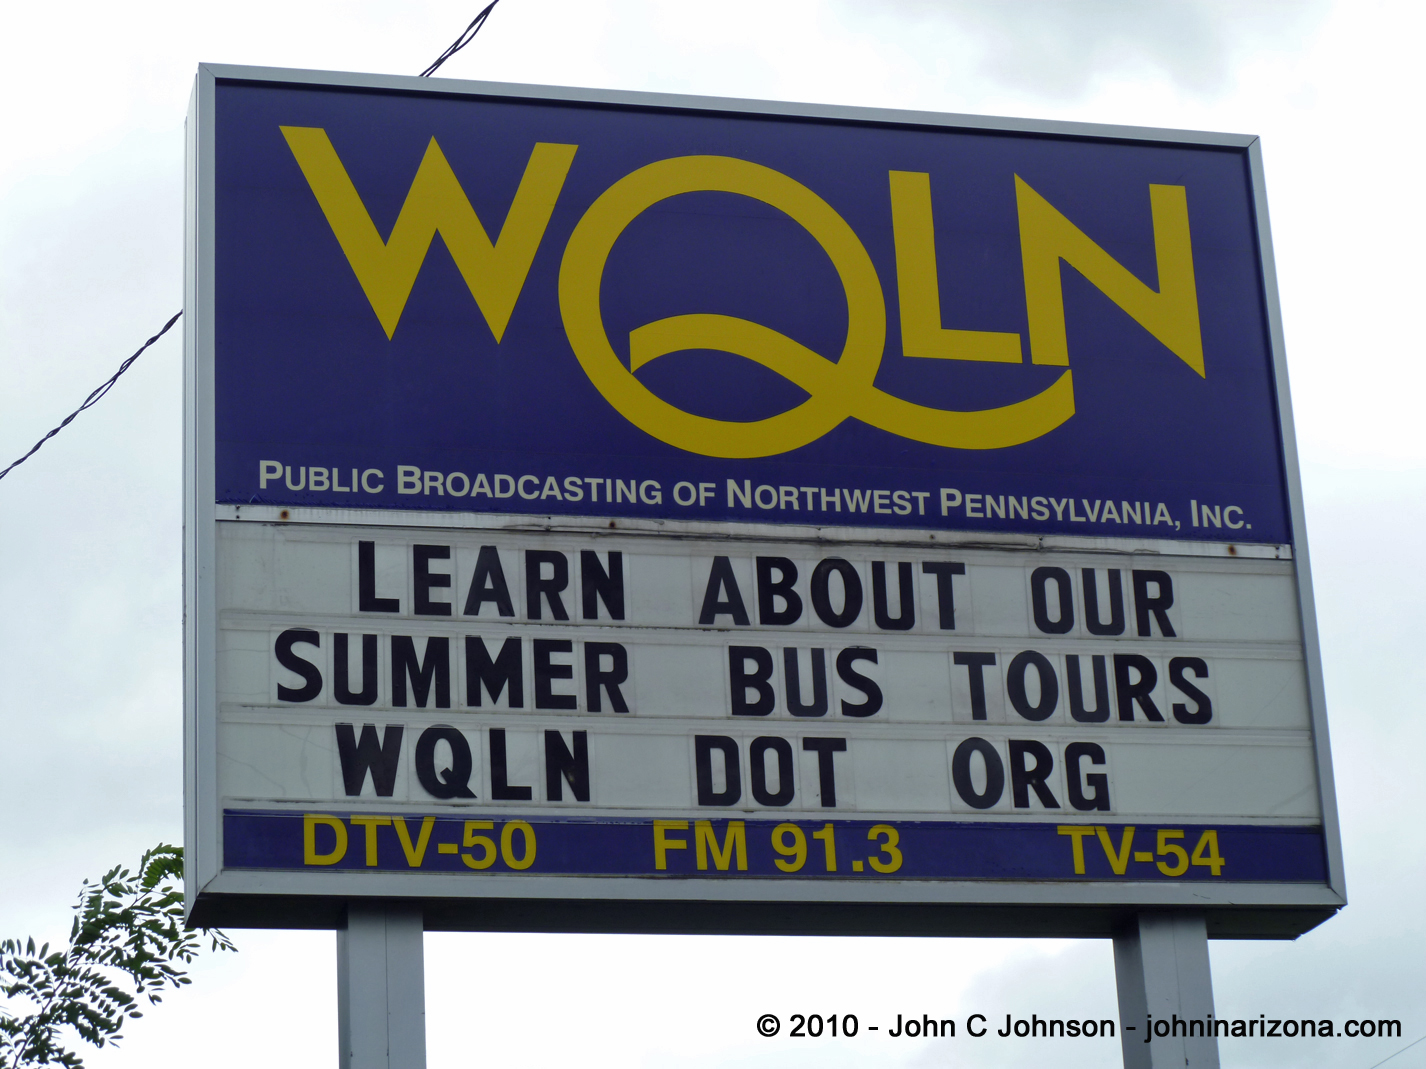 WQLN TV Channel 54 Erie, Pennsylvania